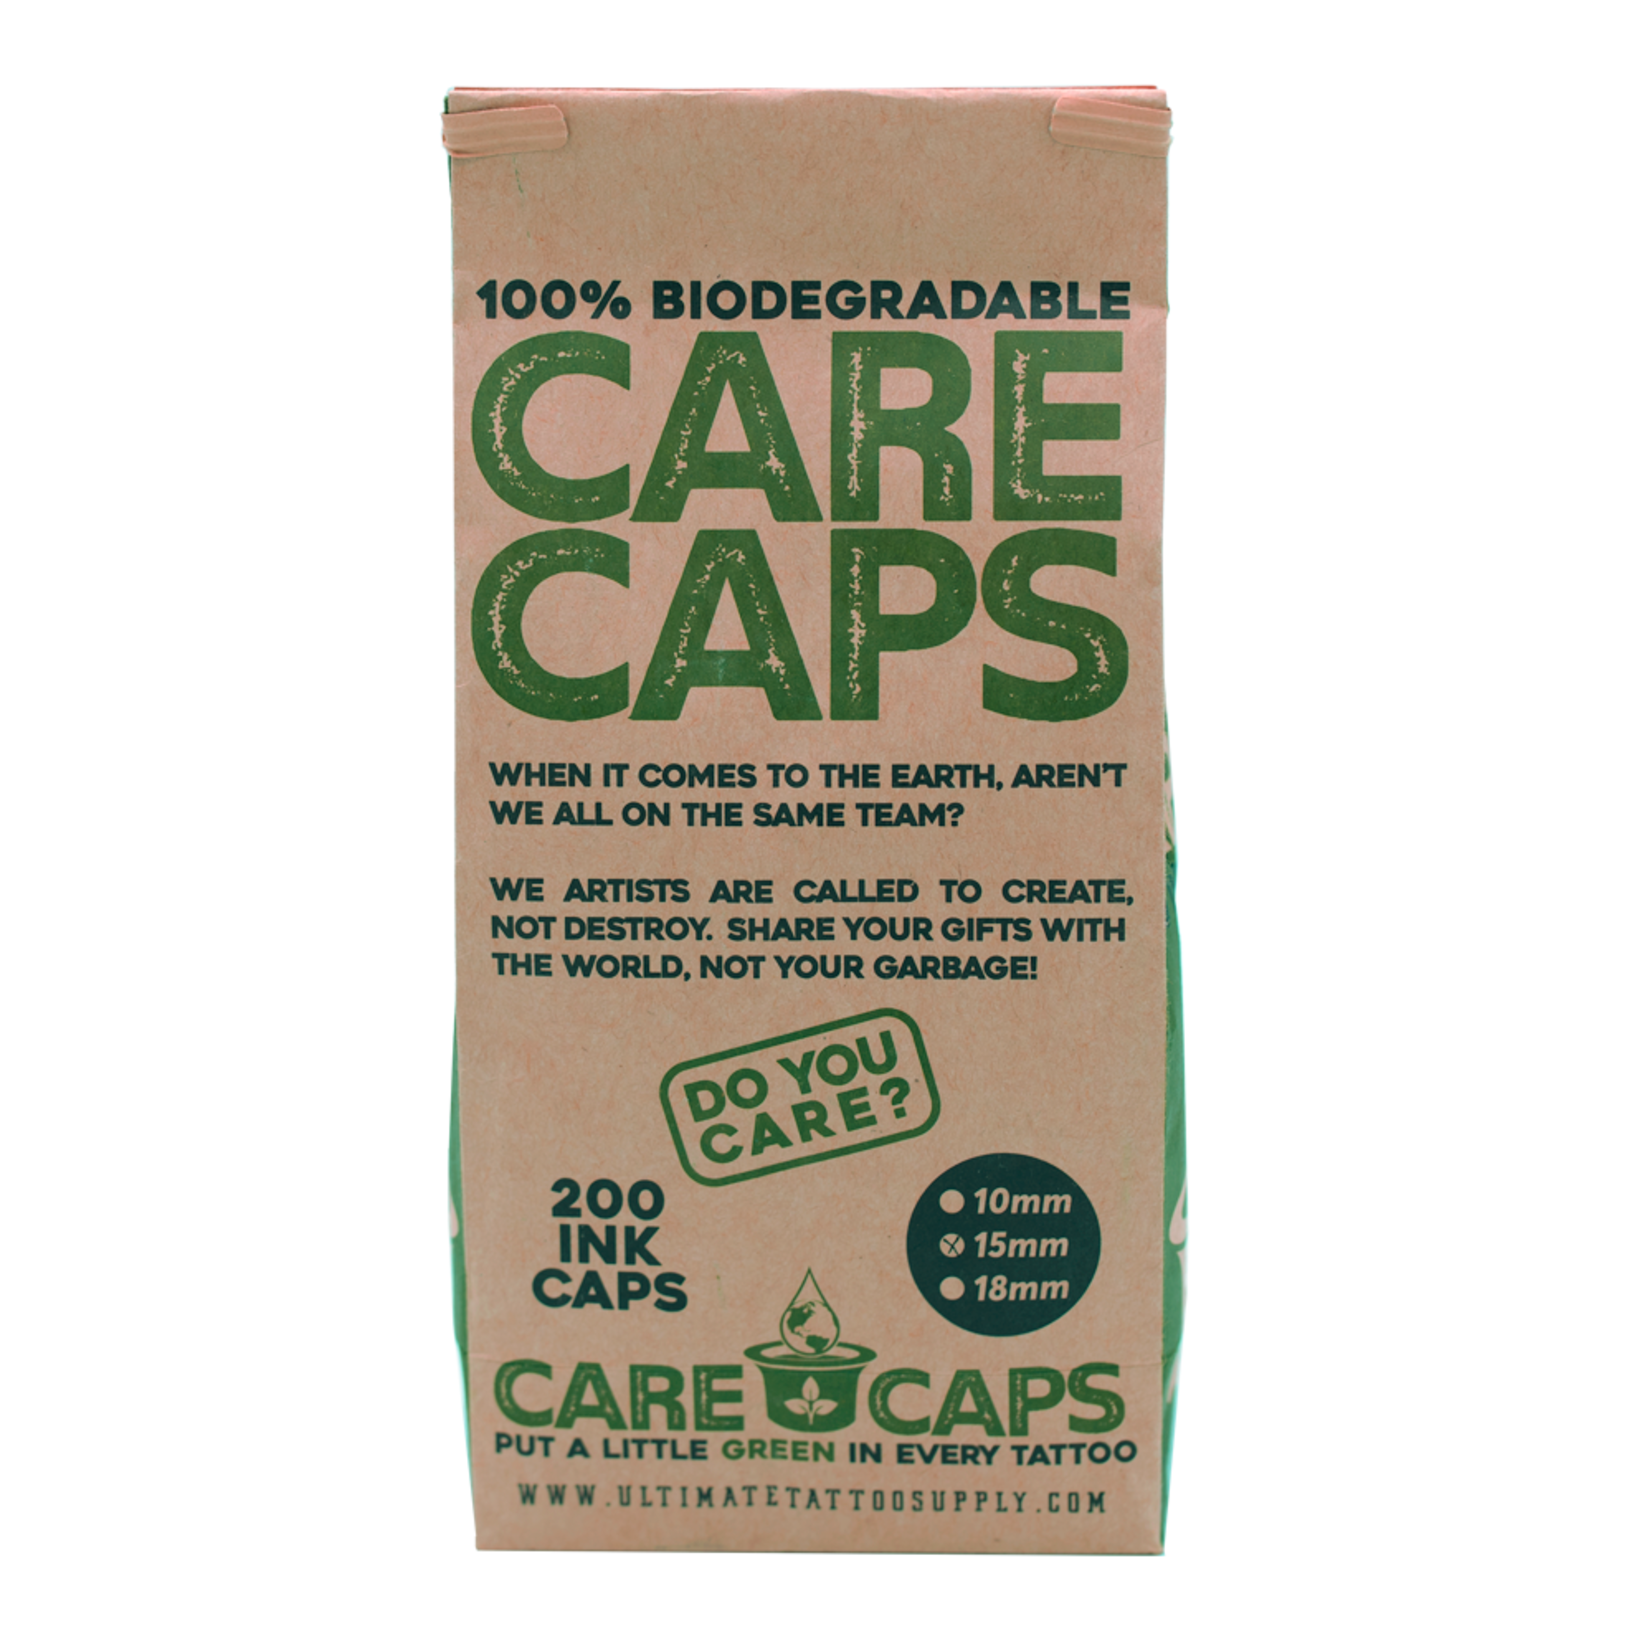 CARE CAPS BIODEGRADABLE INK CAPS - 200/BAG